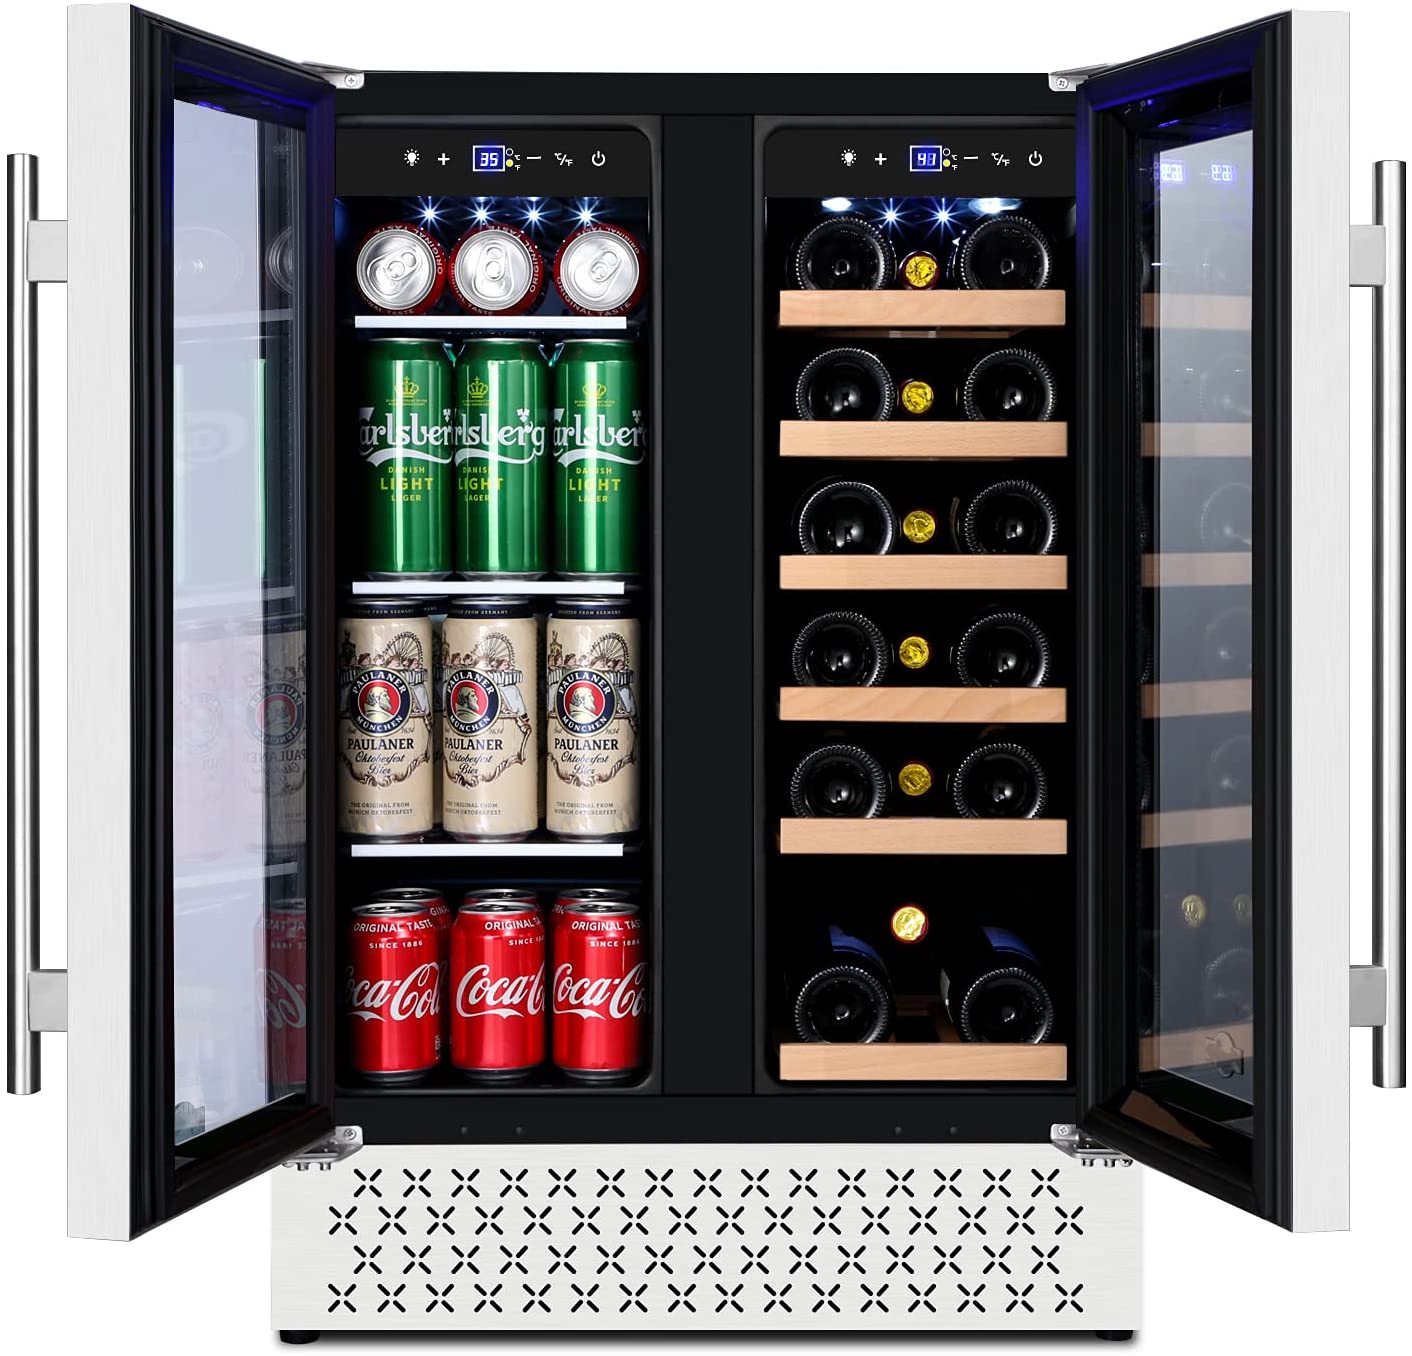 TYLZA Wine and Beverage Refrigerator